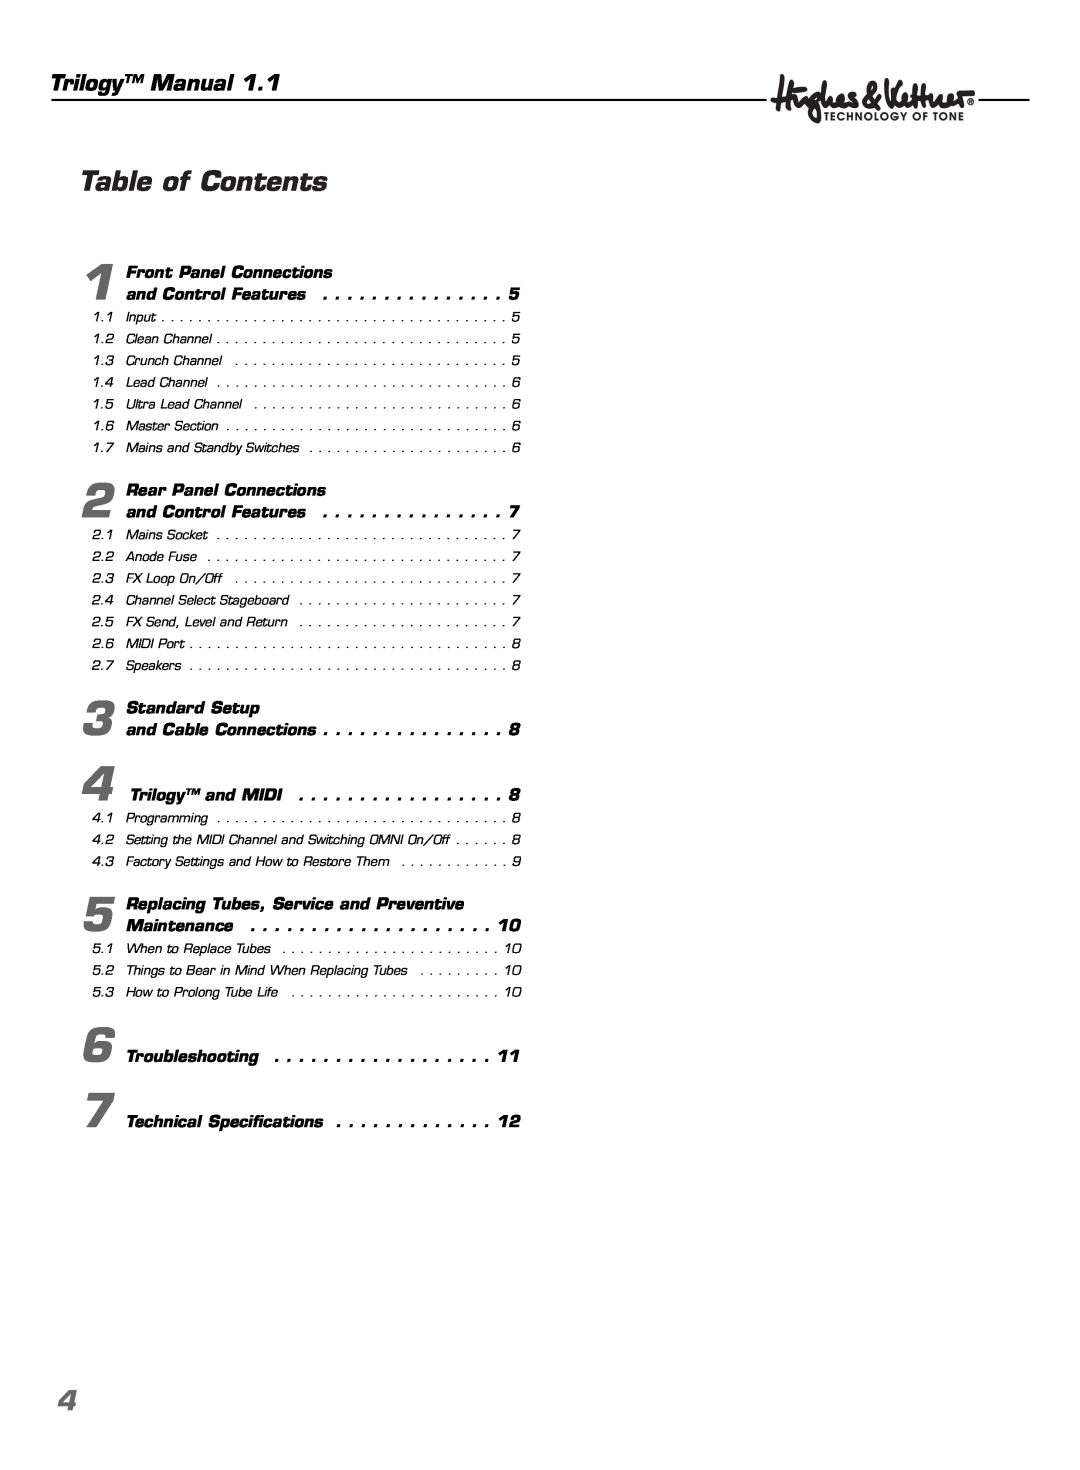 Hughes & Kettner TrilogyTM manual Table of Contents, Trilogy Manual 